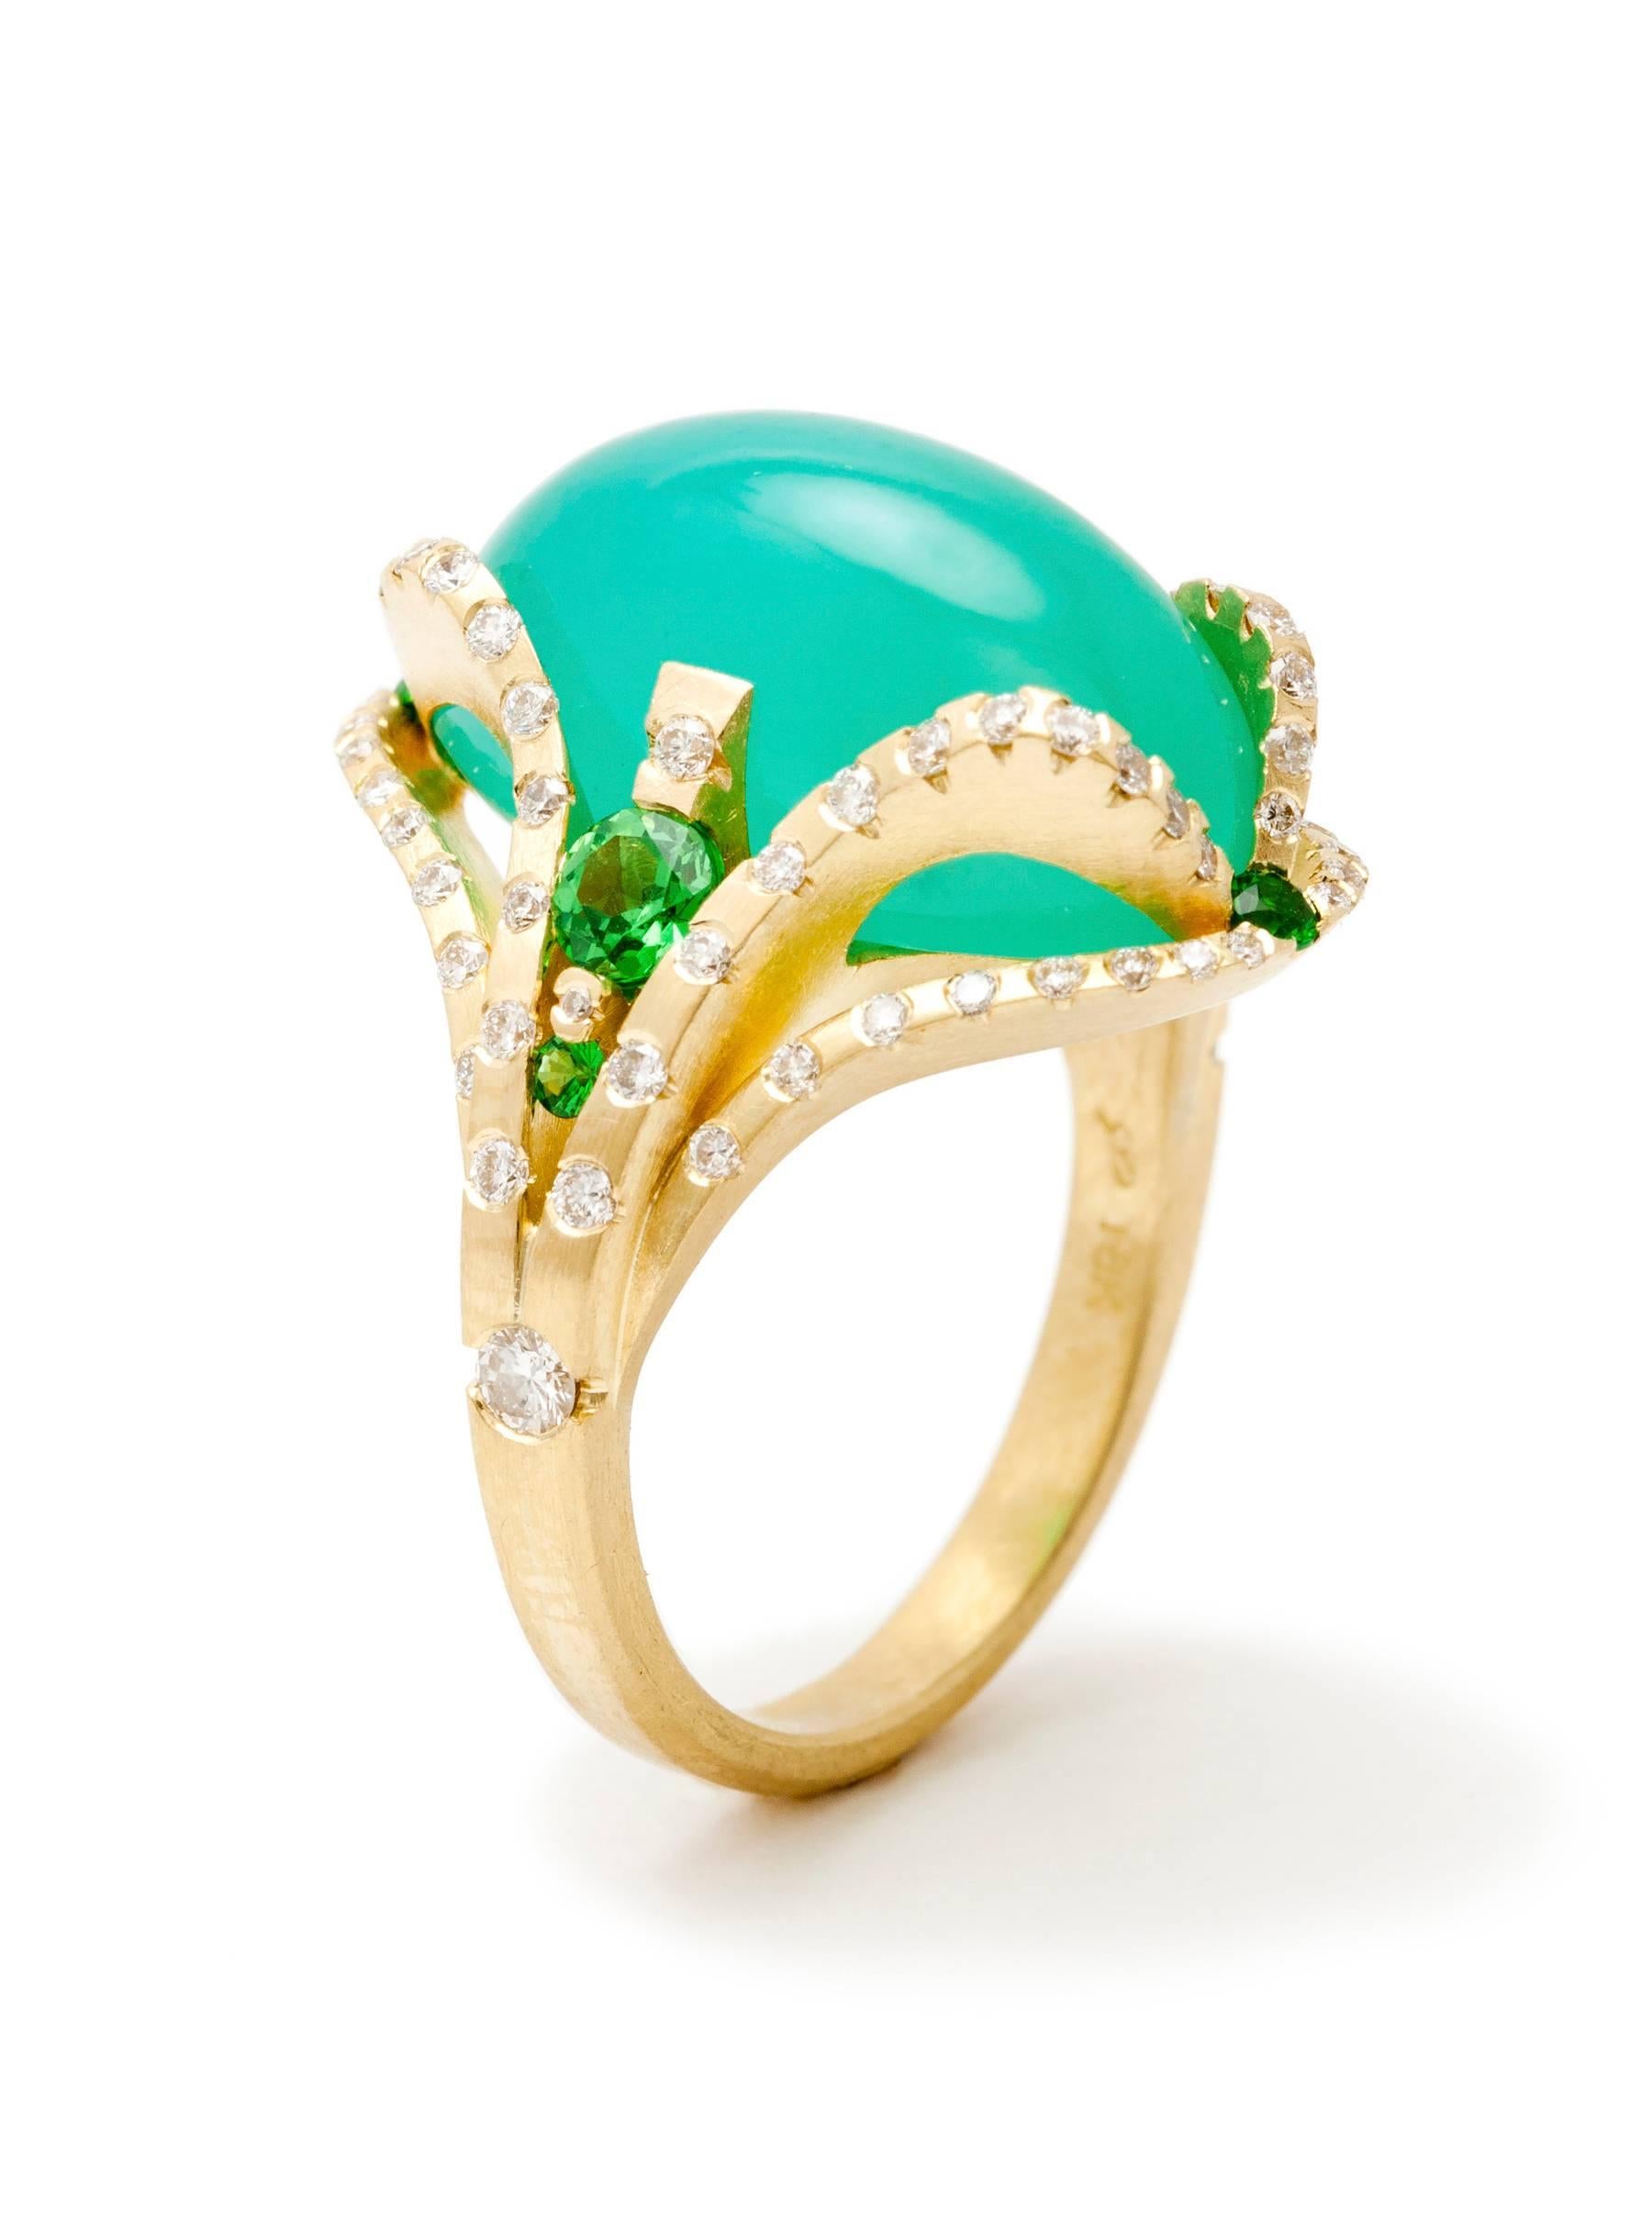 Ryan Roberts 18K Gold Ring featuring an 11.25ct Gem Silica, Tsavorite garnets (.56ctw), & VS1 Diamonds (.62ctw), Winner 2015 AGTA Spectrum Awards